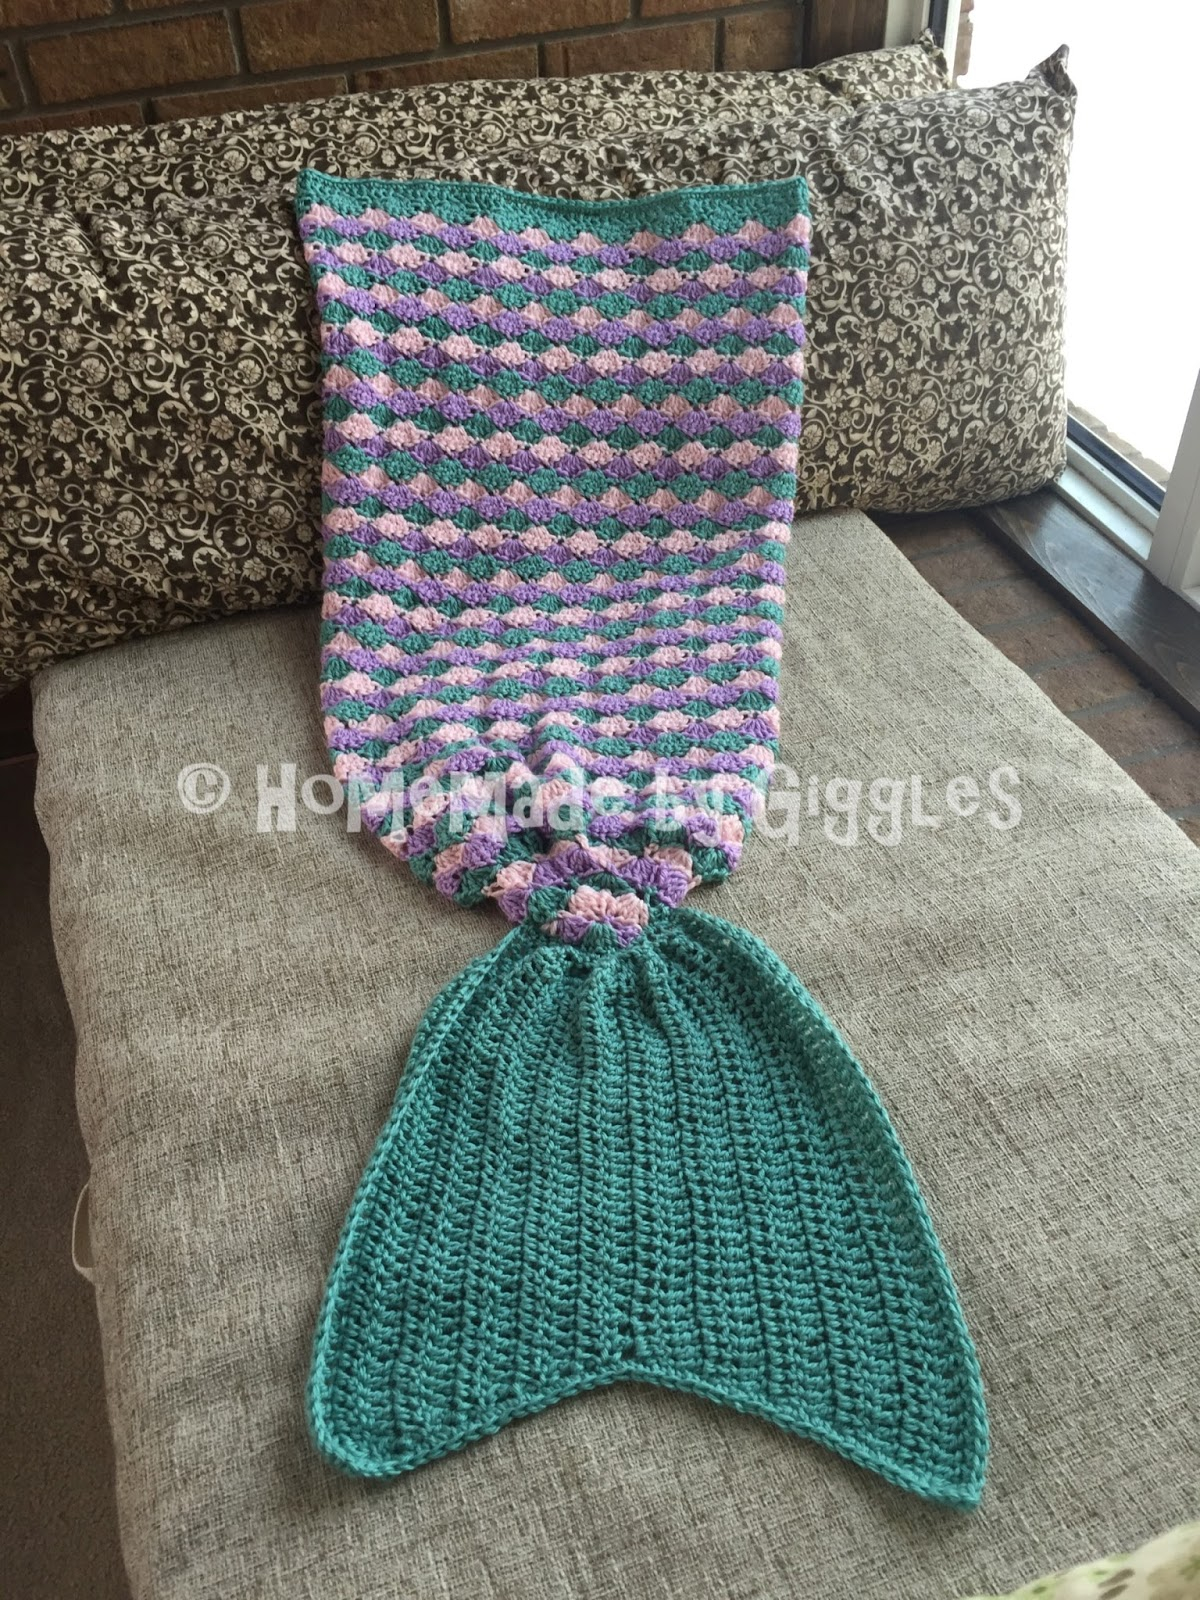 Star Shell Afghan Crochet Pattern Homemade Giggles Making A Mermaid Tail Blanket